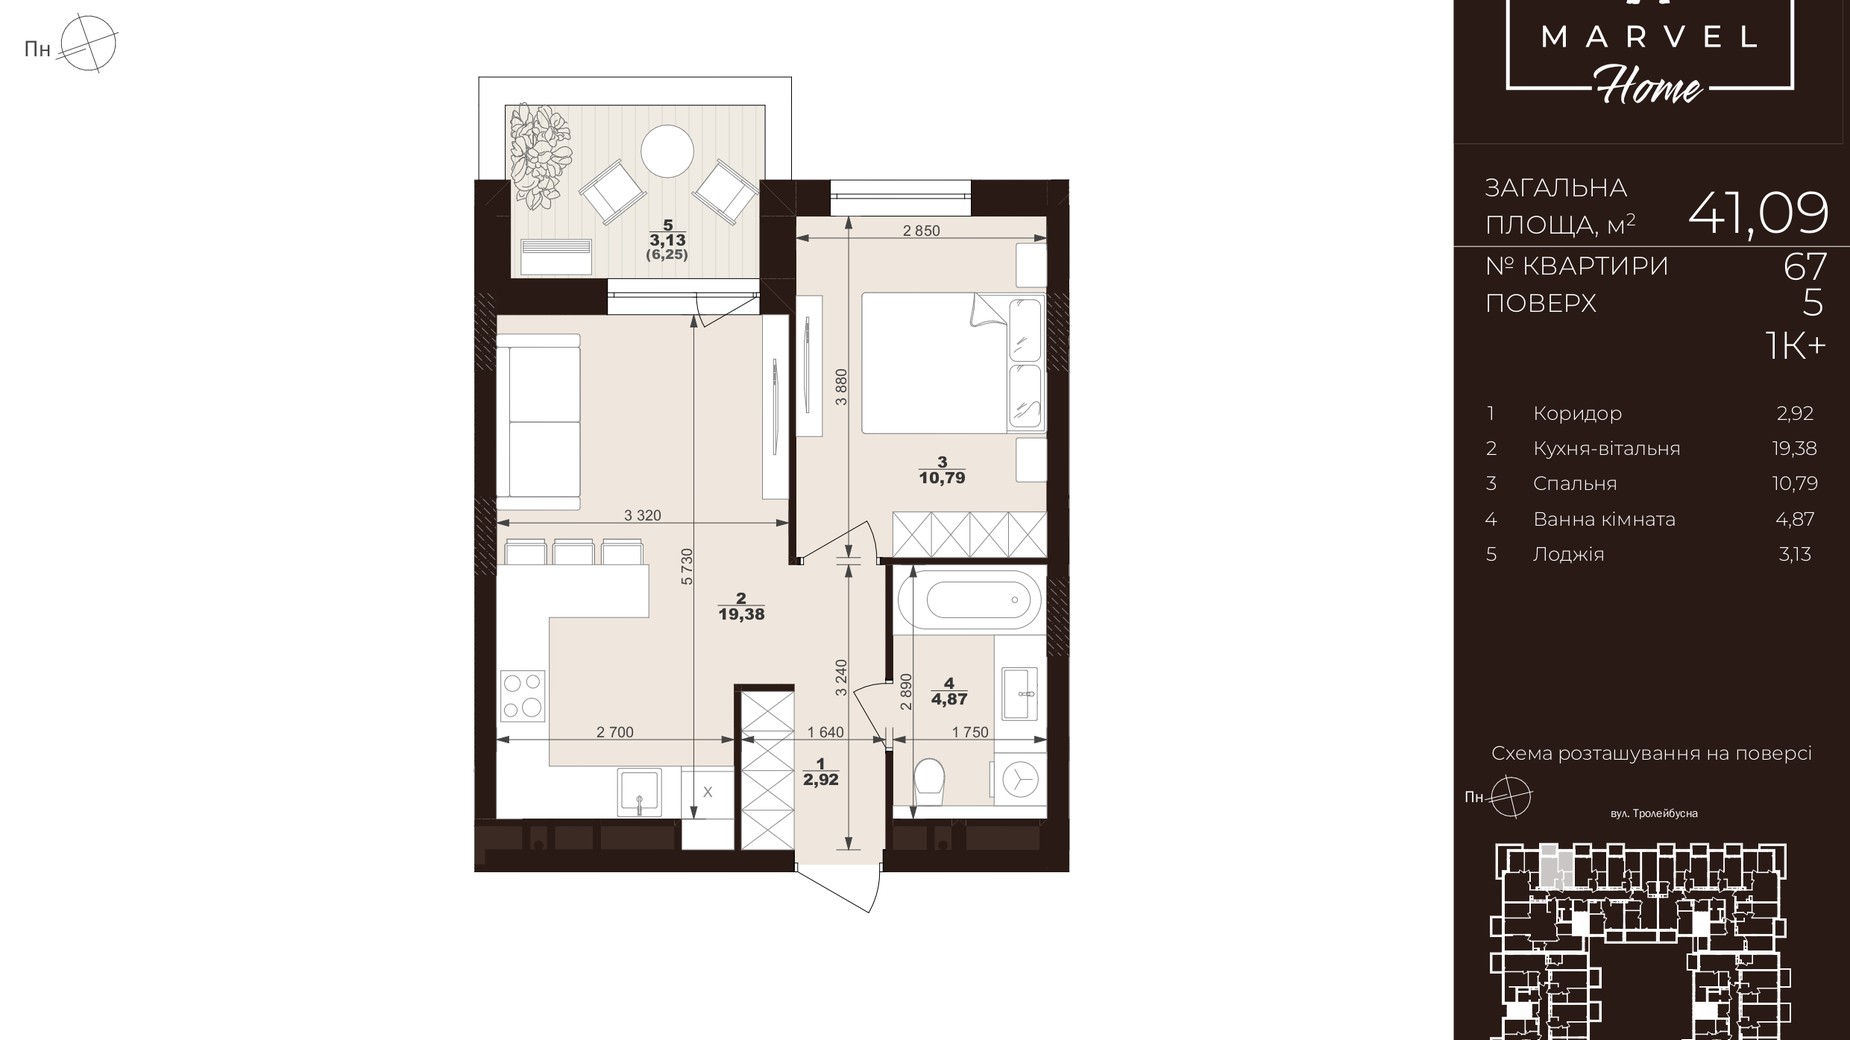 Планування 1-кімнатної квартири в ЖК Marvel Home 41.09 м², фото 714598